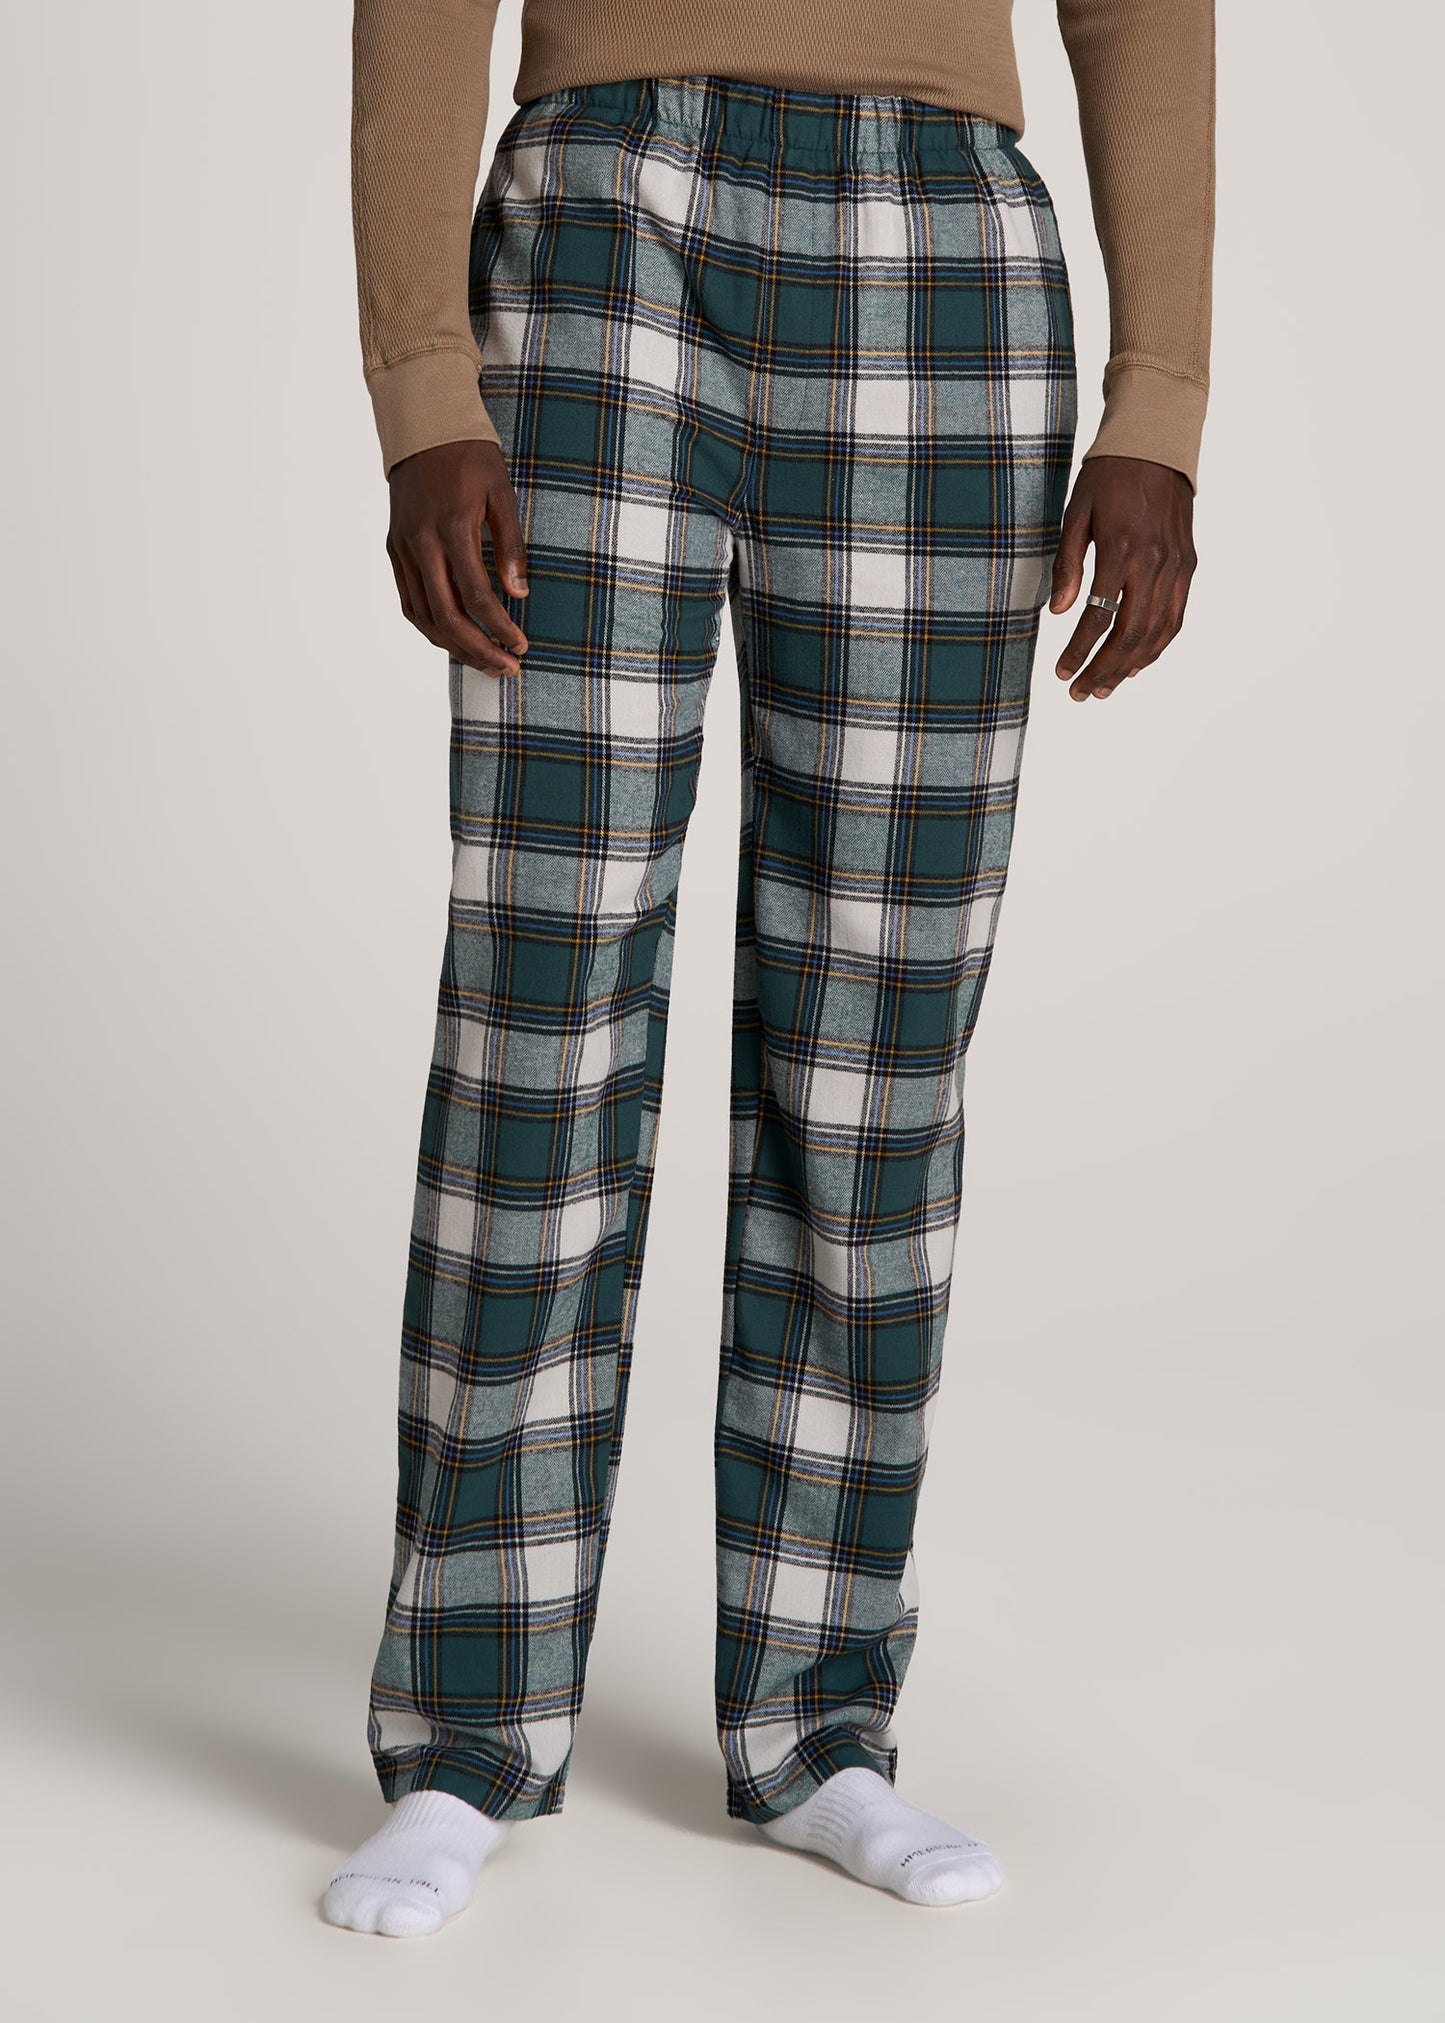 Plaid Pajama Pants for Tall Men in Green Tartan